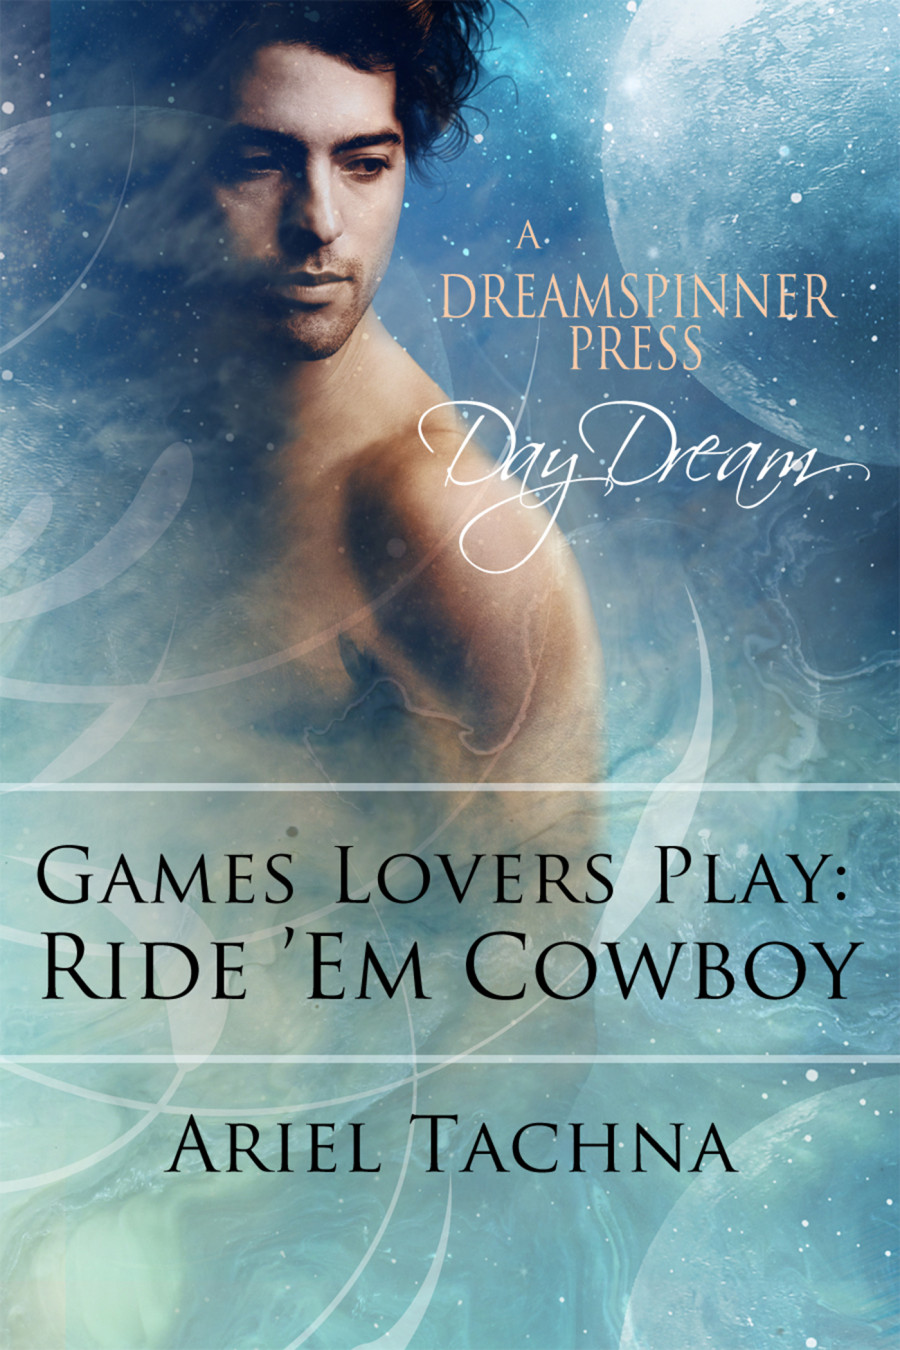 Games Lovers Play: Ride 'em Cowboy